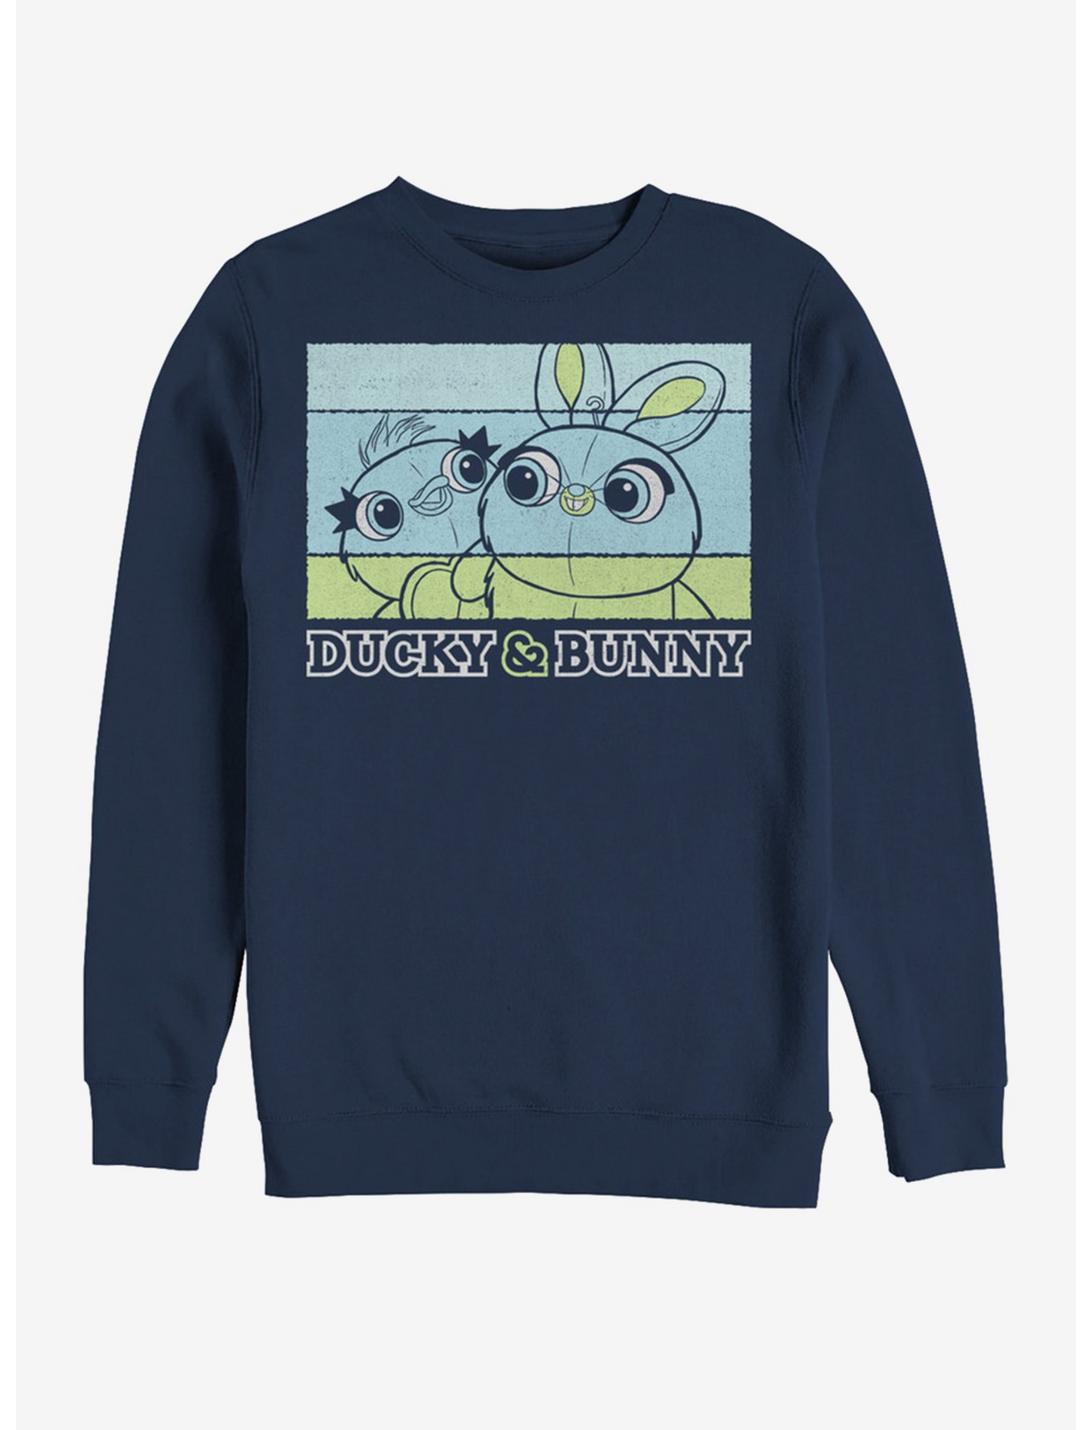 Disney Pixar Toy Story 4 Ducky And Bunny Navy Blue Sweatshirt, NAVY, hi-res